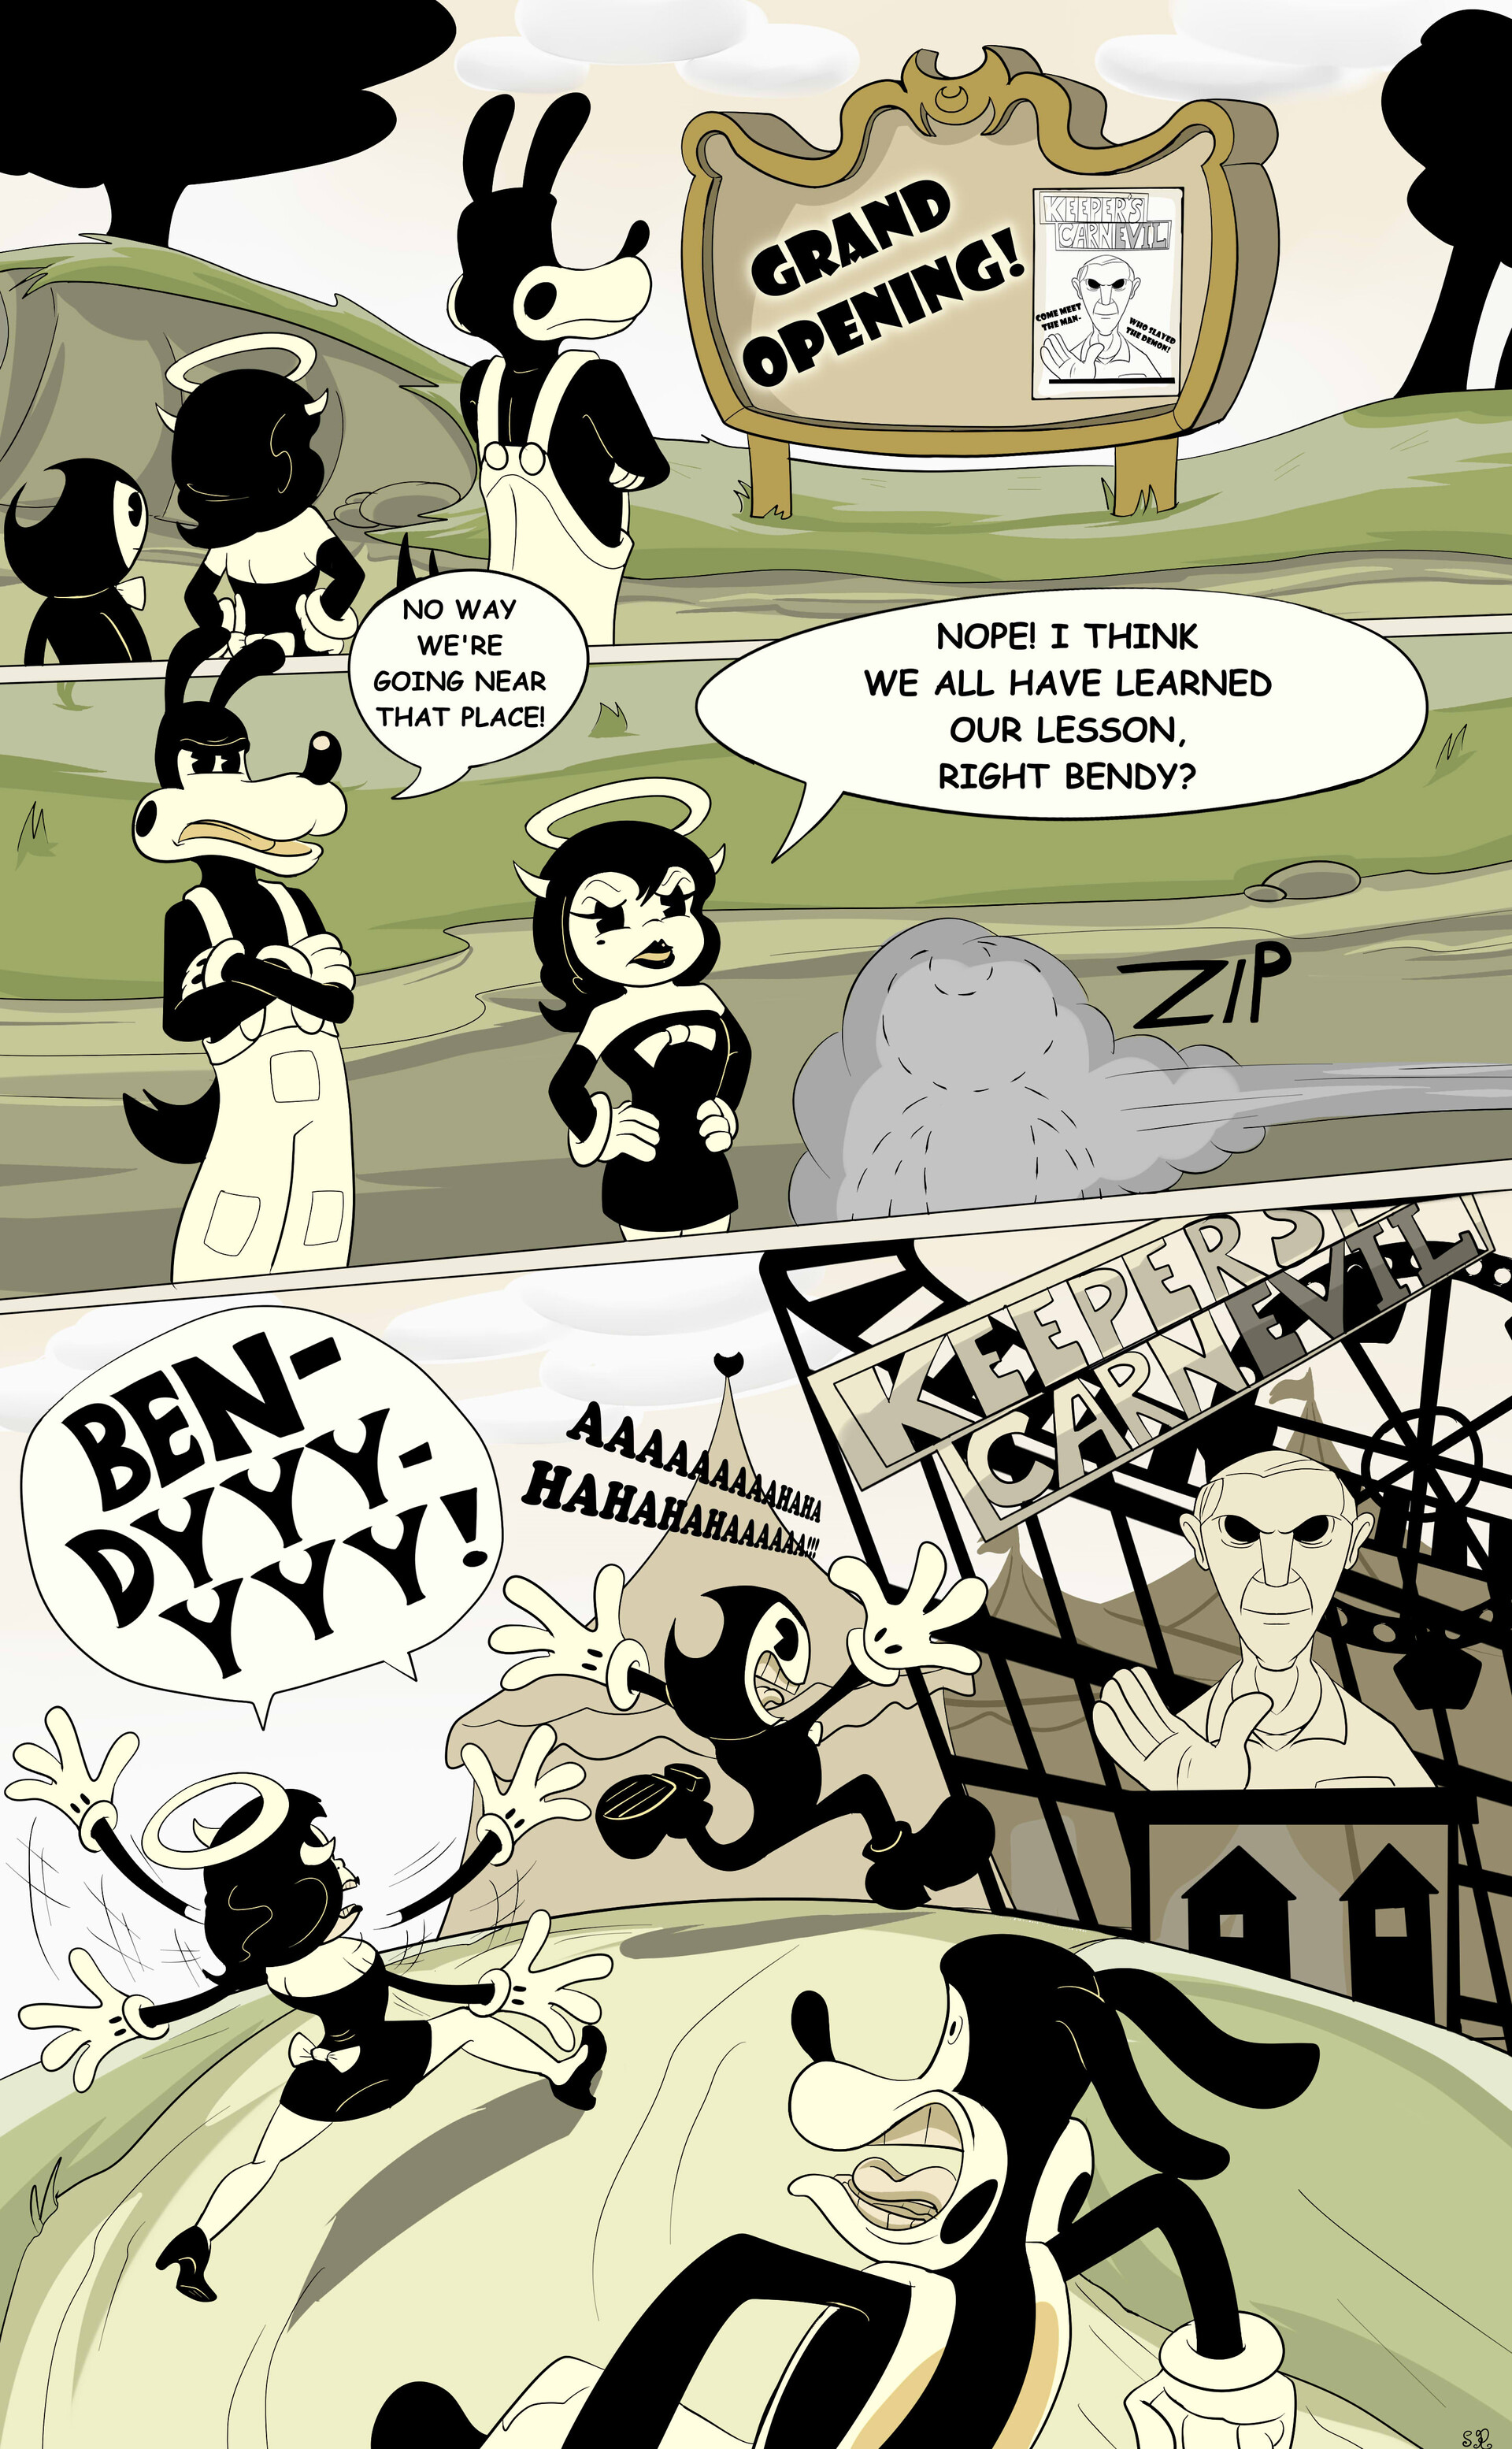 ArtStation - Bendy comic